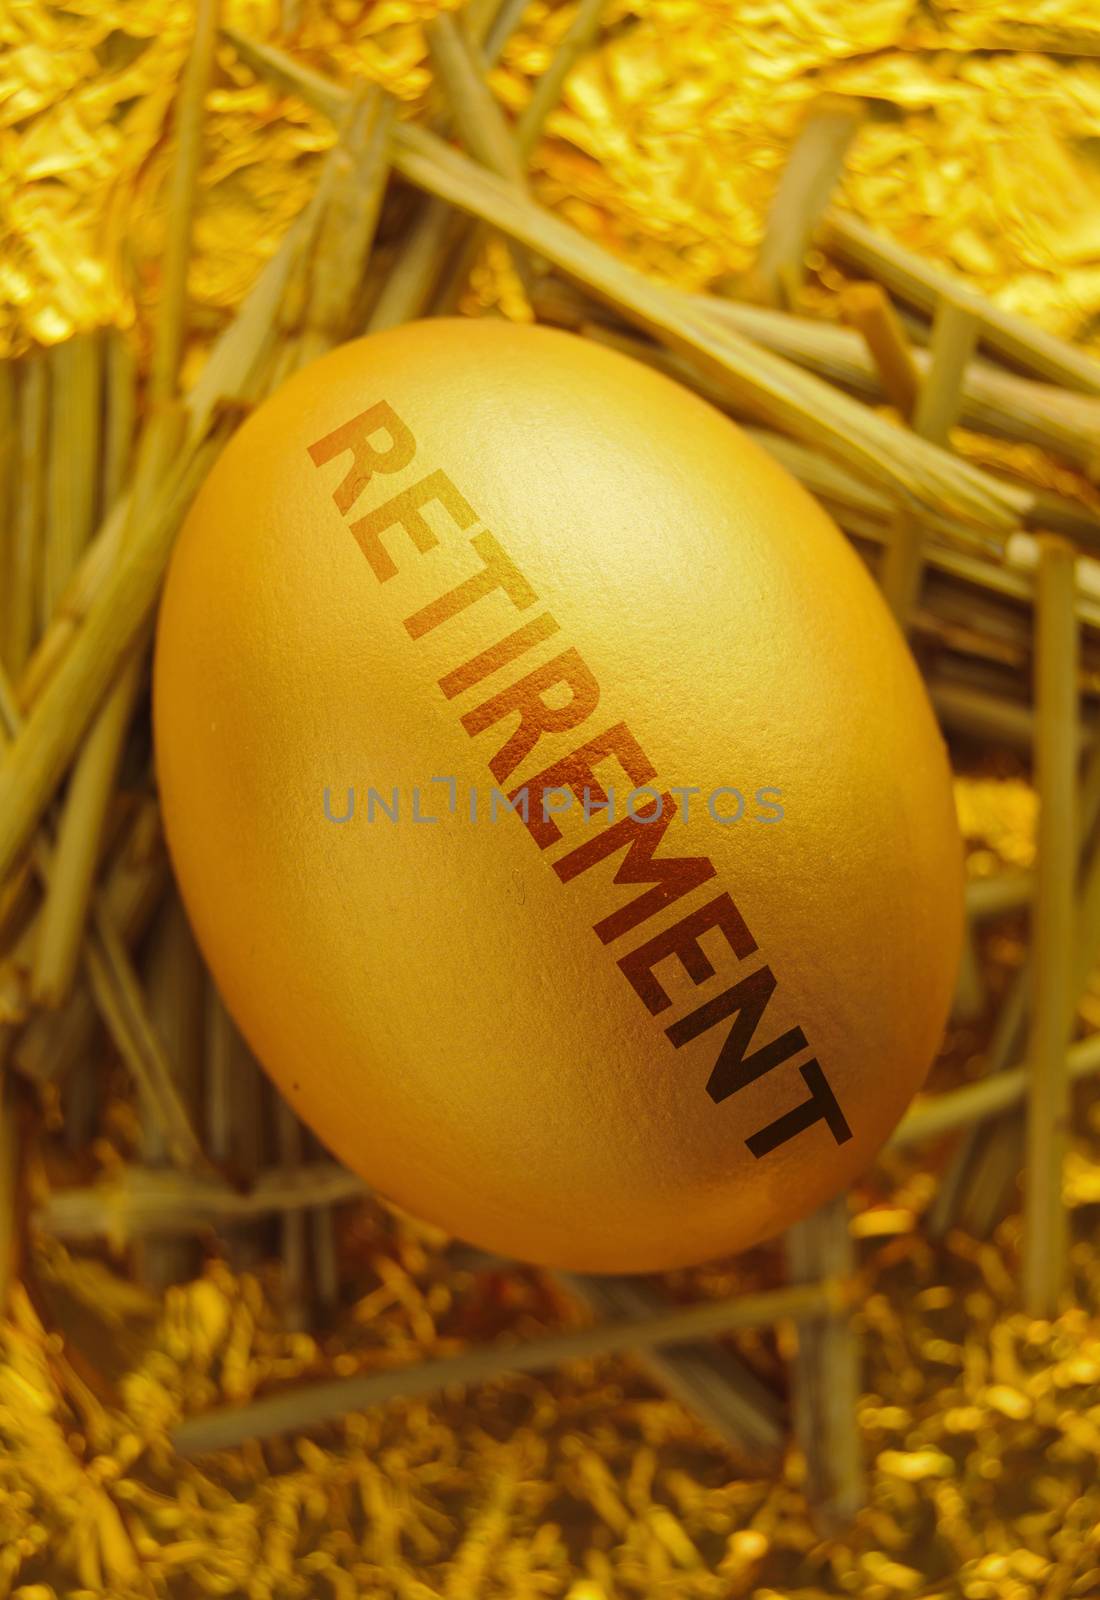 Retirement nest egg  by unikpix